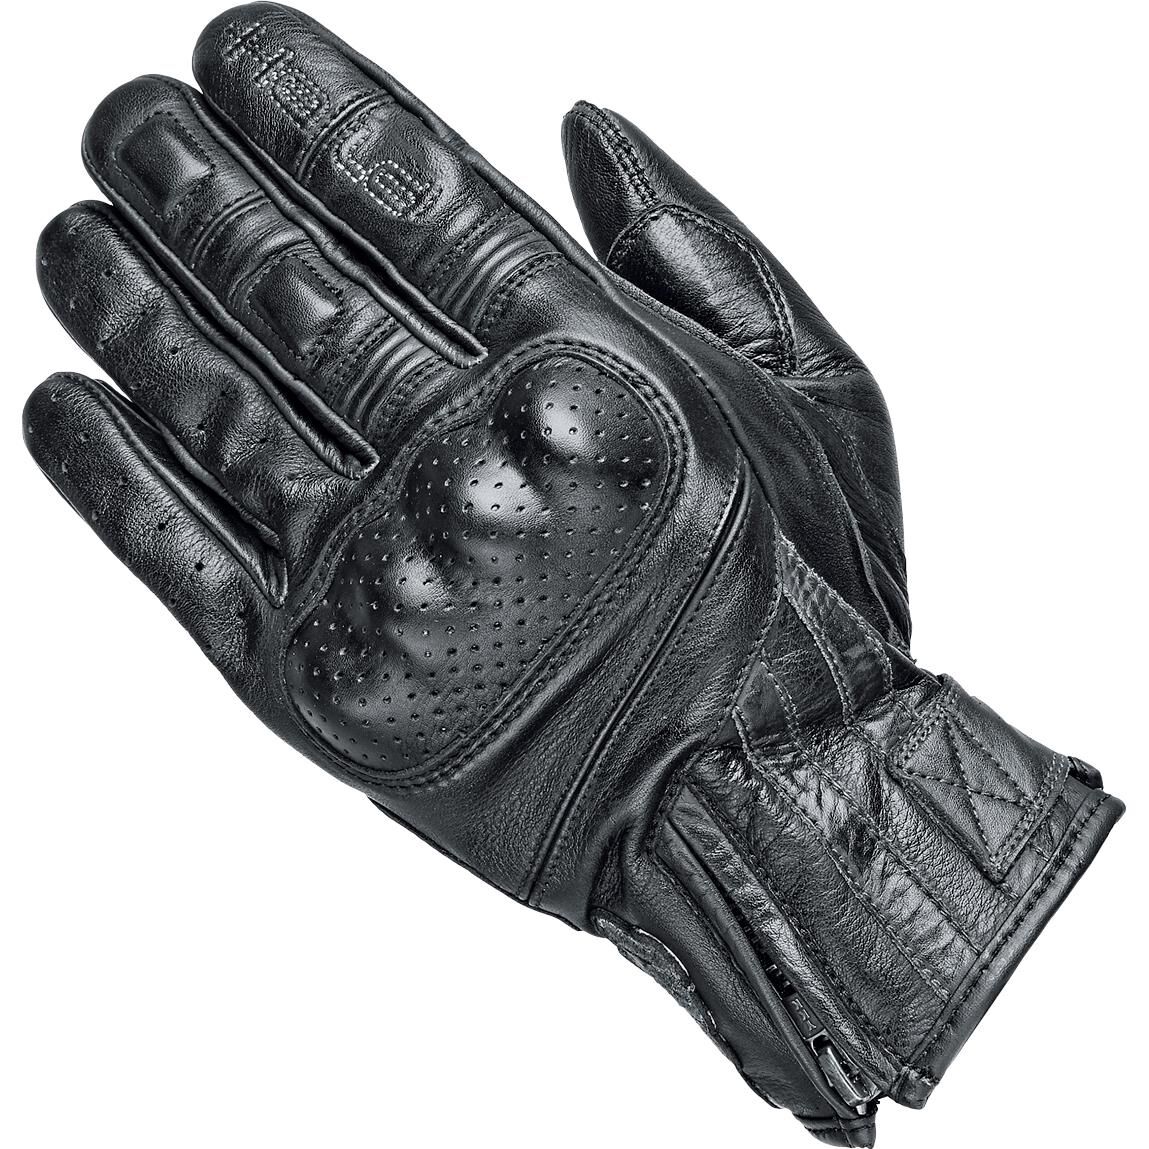 Held Paxton Handschuh schwarz 8 Herren von held